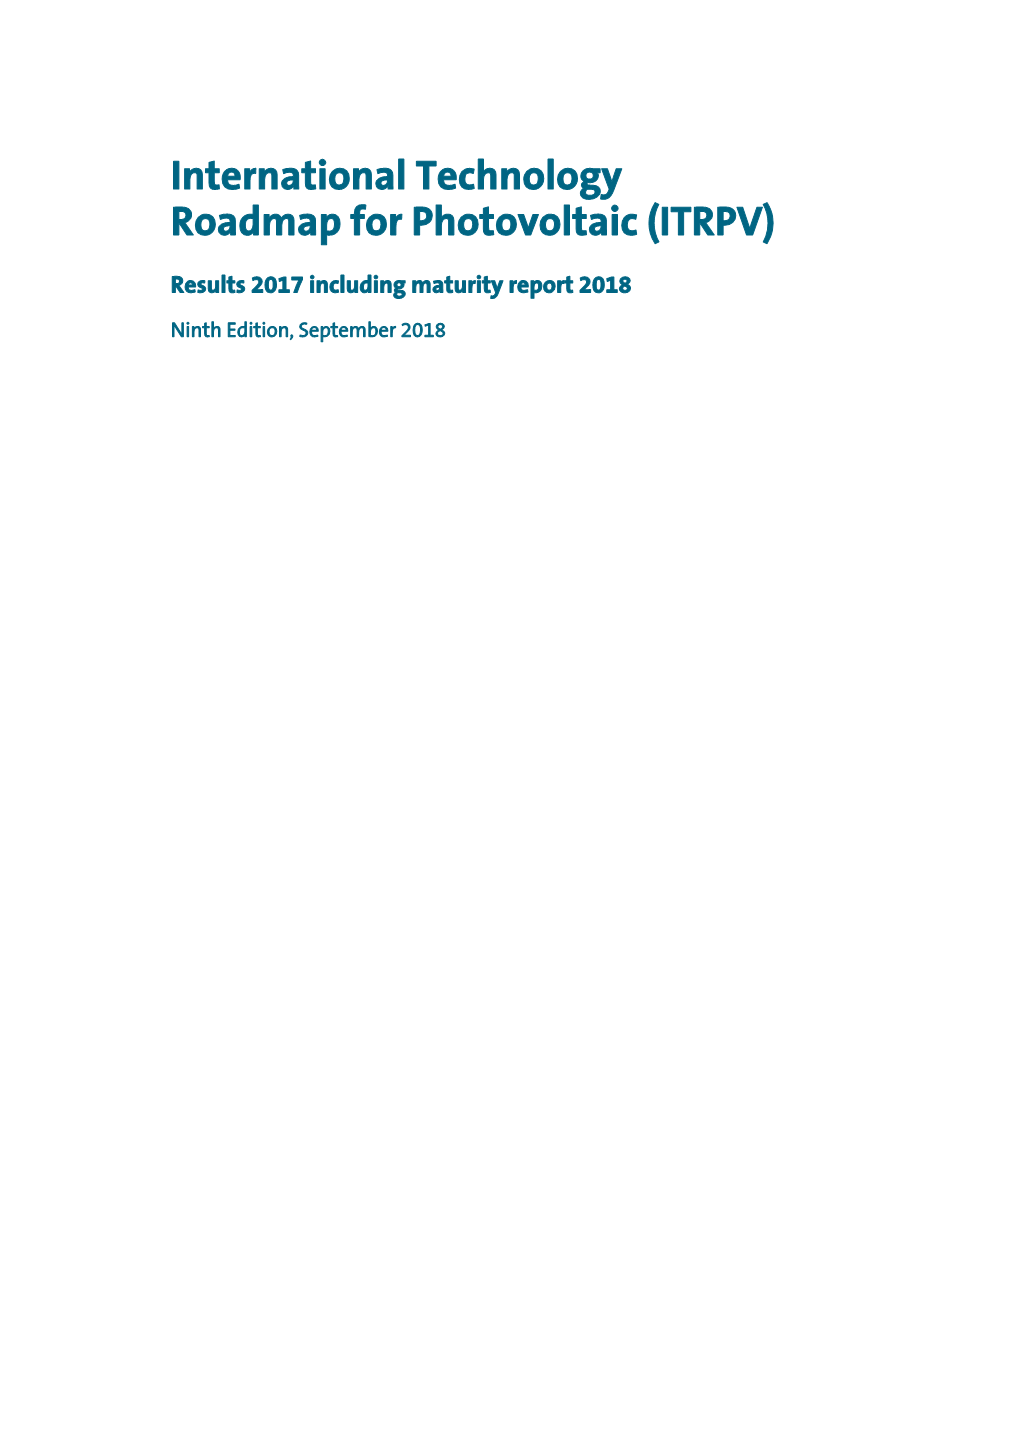 International Technology Roadmap for Photovoltaic (ITRPV)